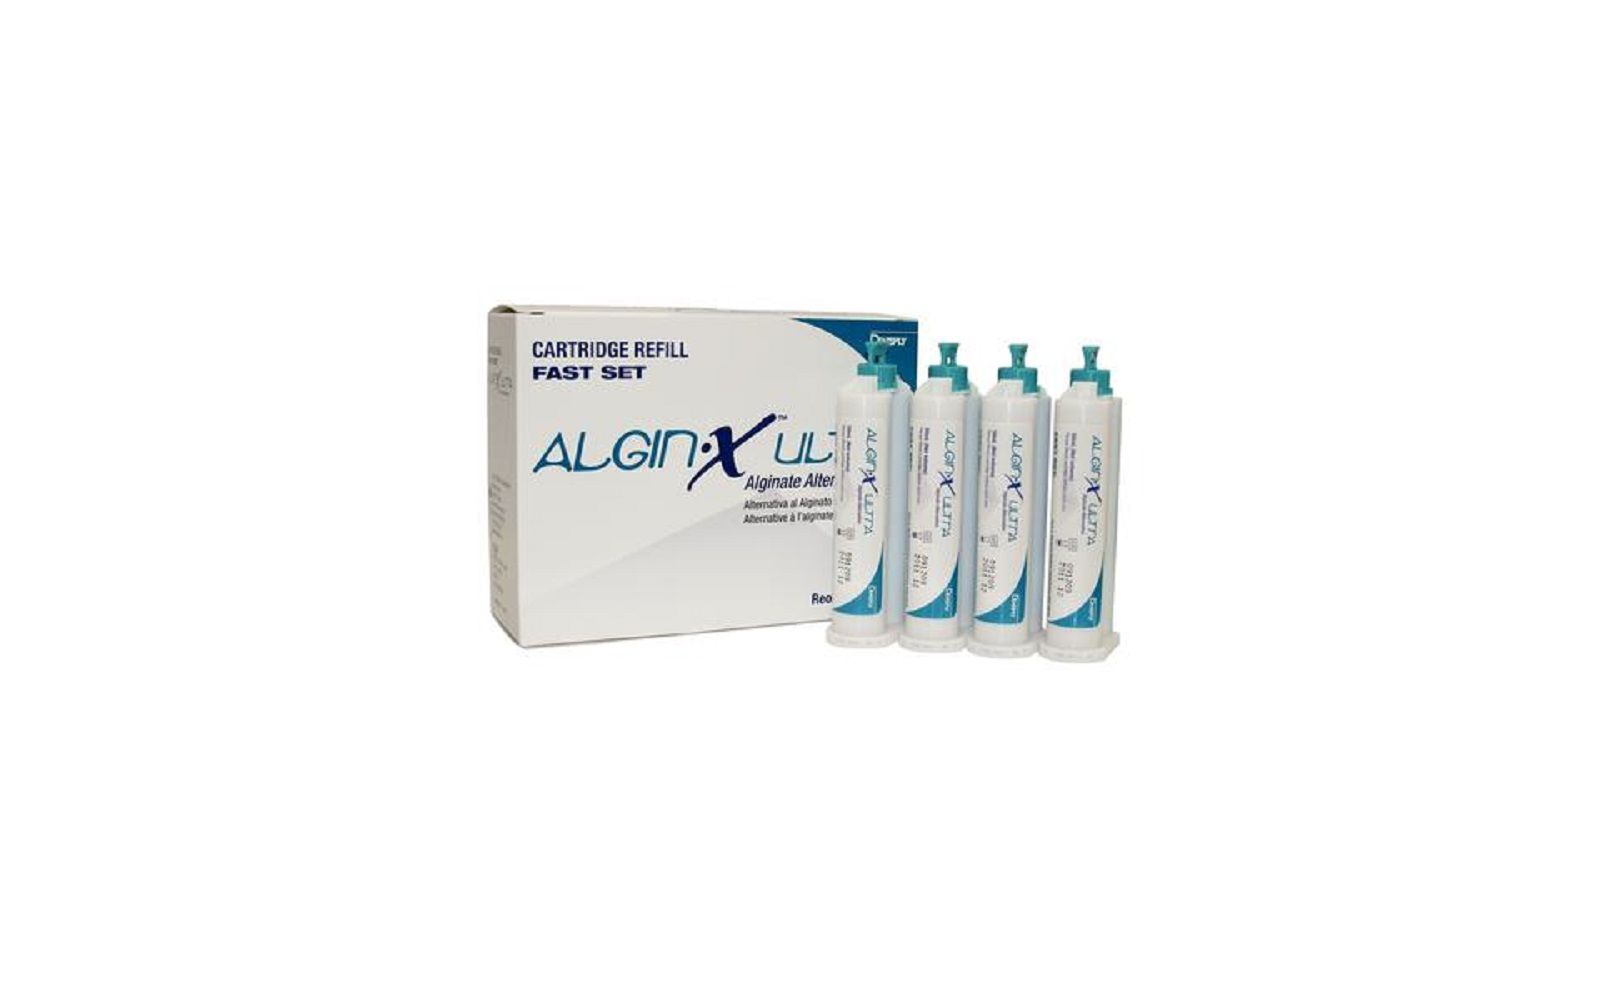 Alterna Alginate Alternative Fast Set Mint 50/ml. 8/pk. - MARK3